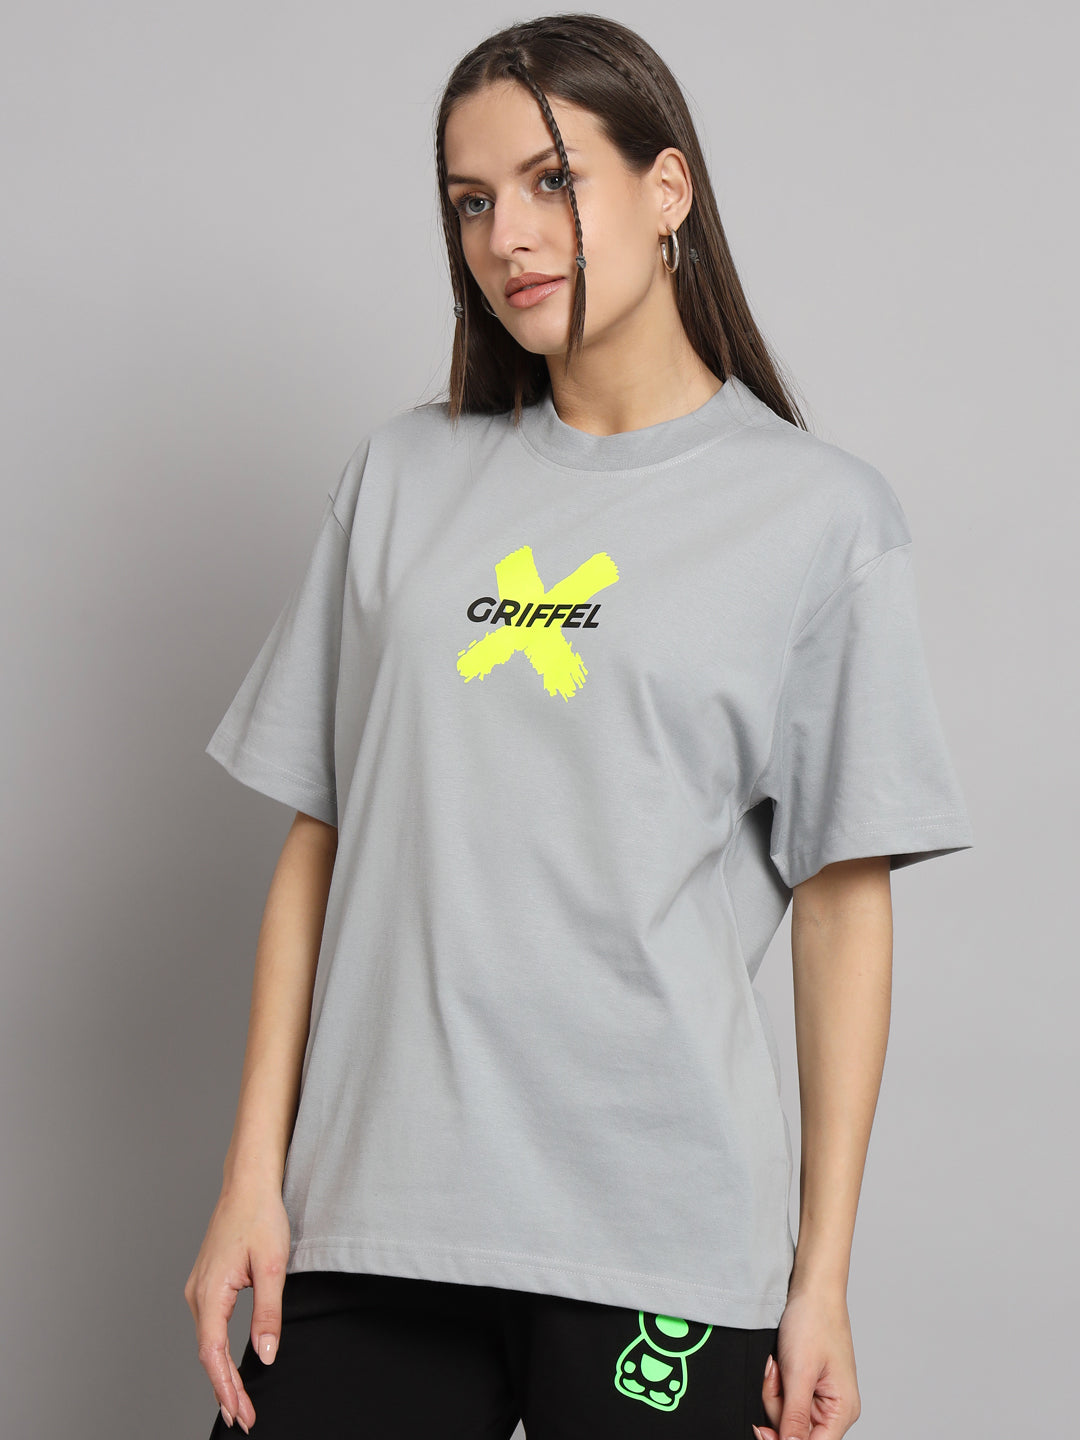 GRIFFEL Women Printed Loose fit Bunny Steel Grey T-shirt - griffel